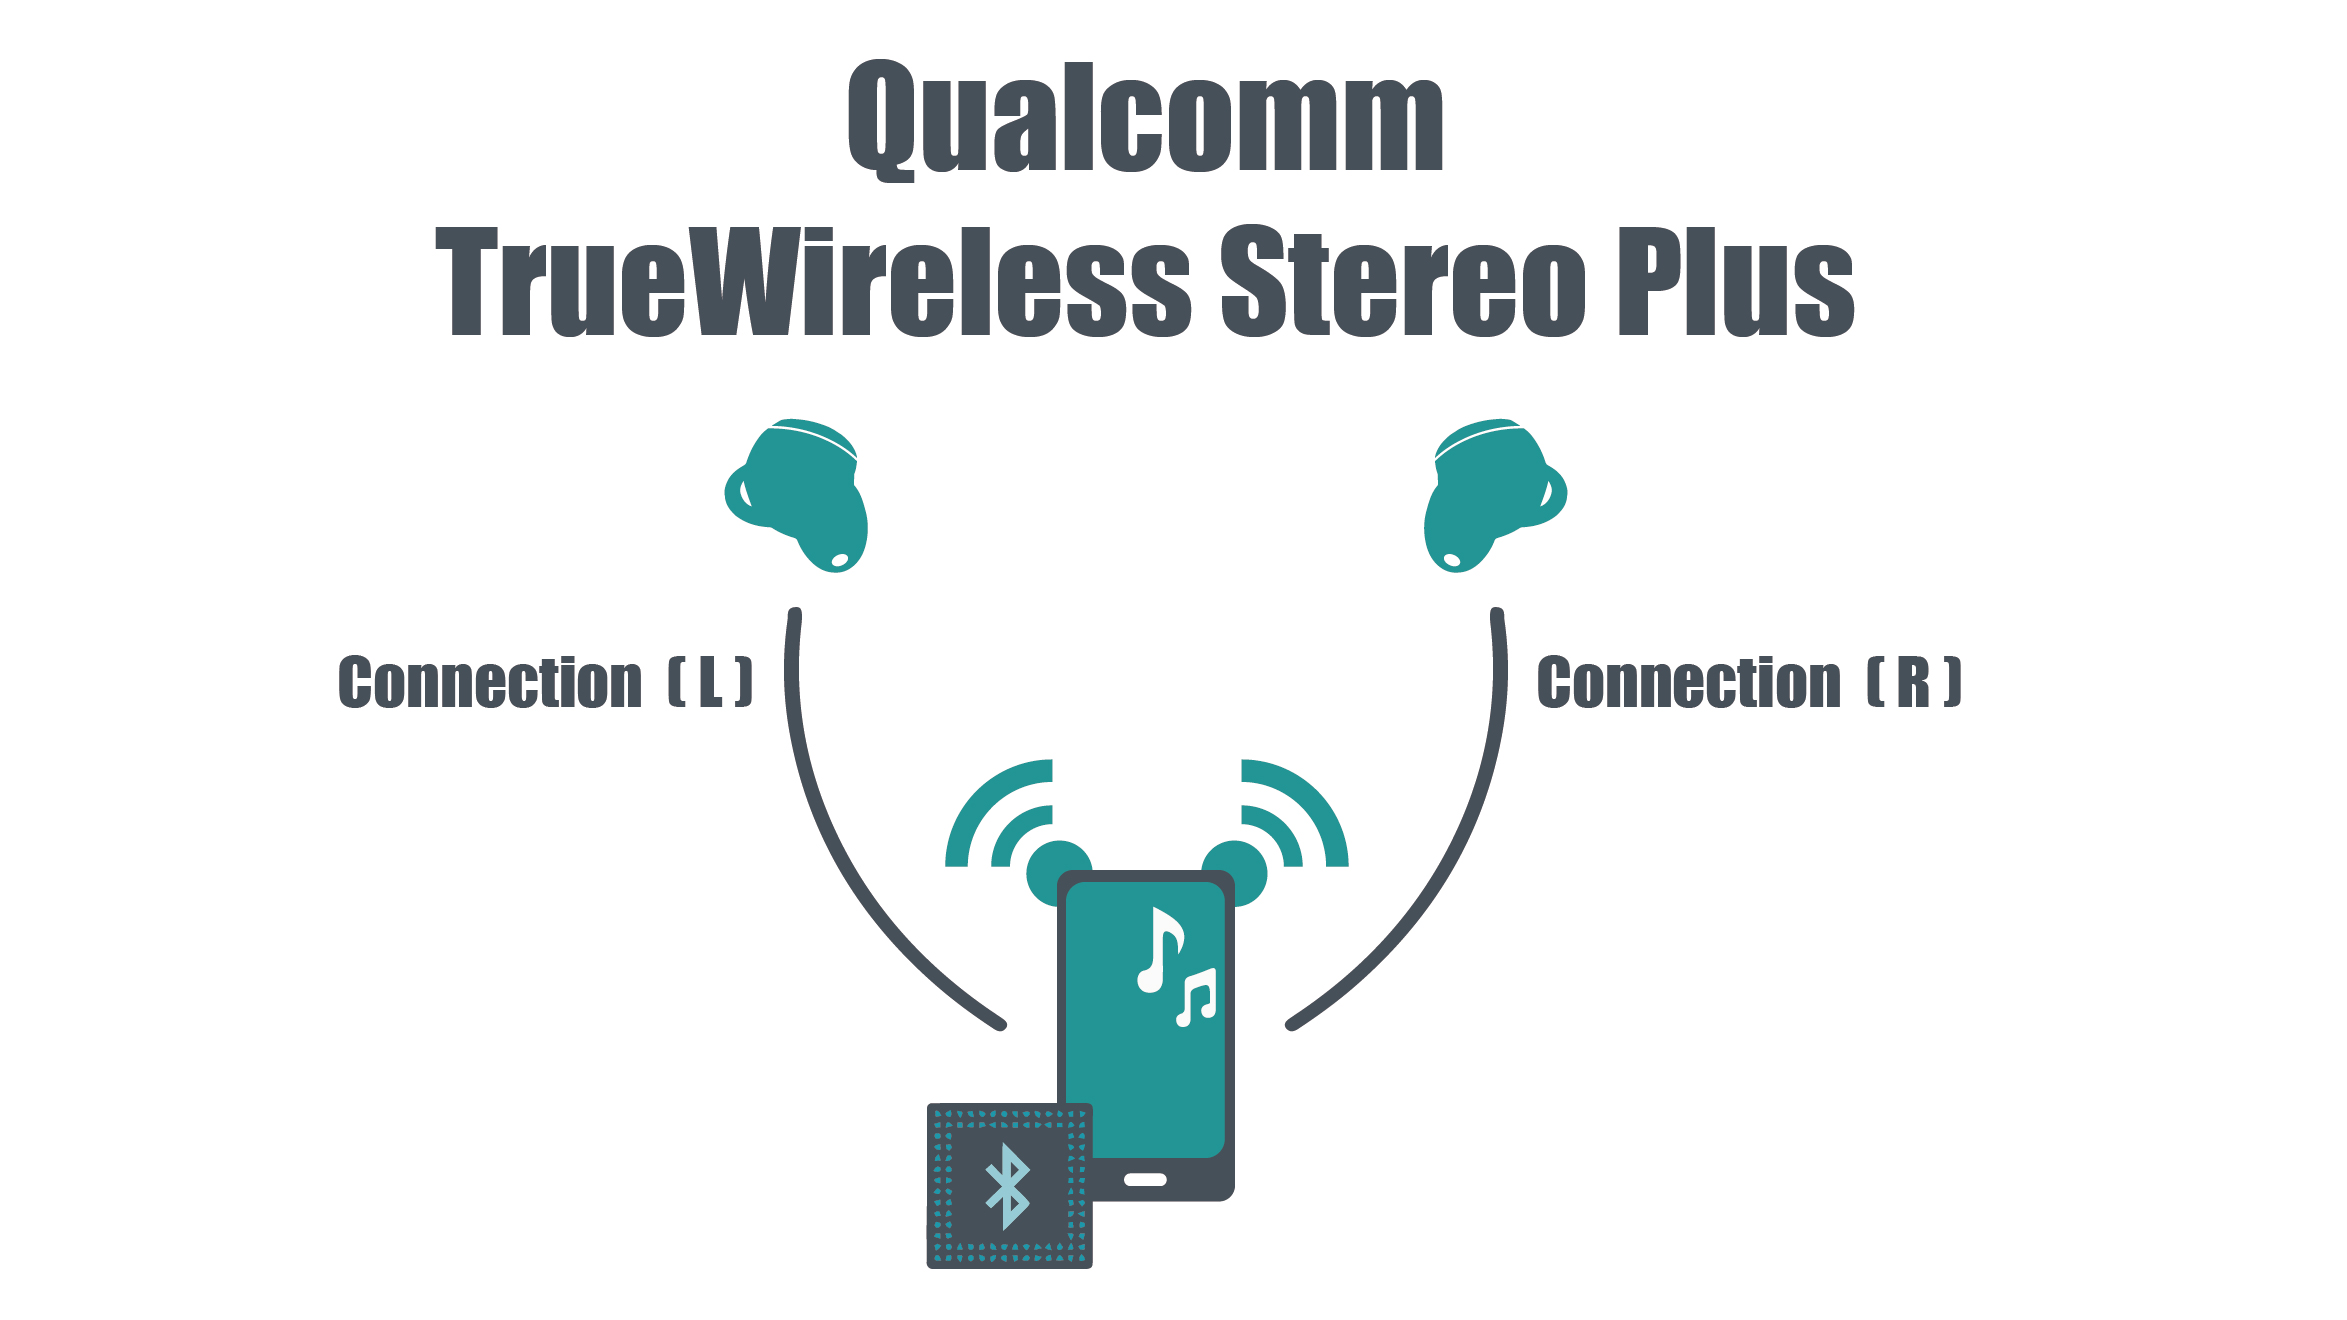 Qualcomm TrueWireless Stereo Plus